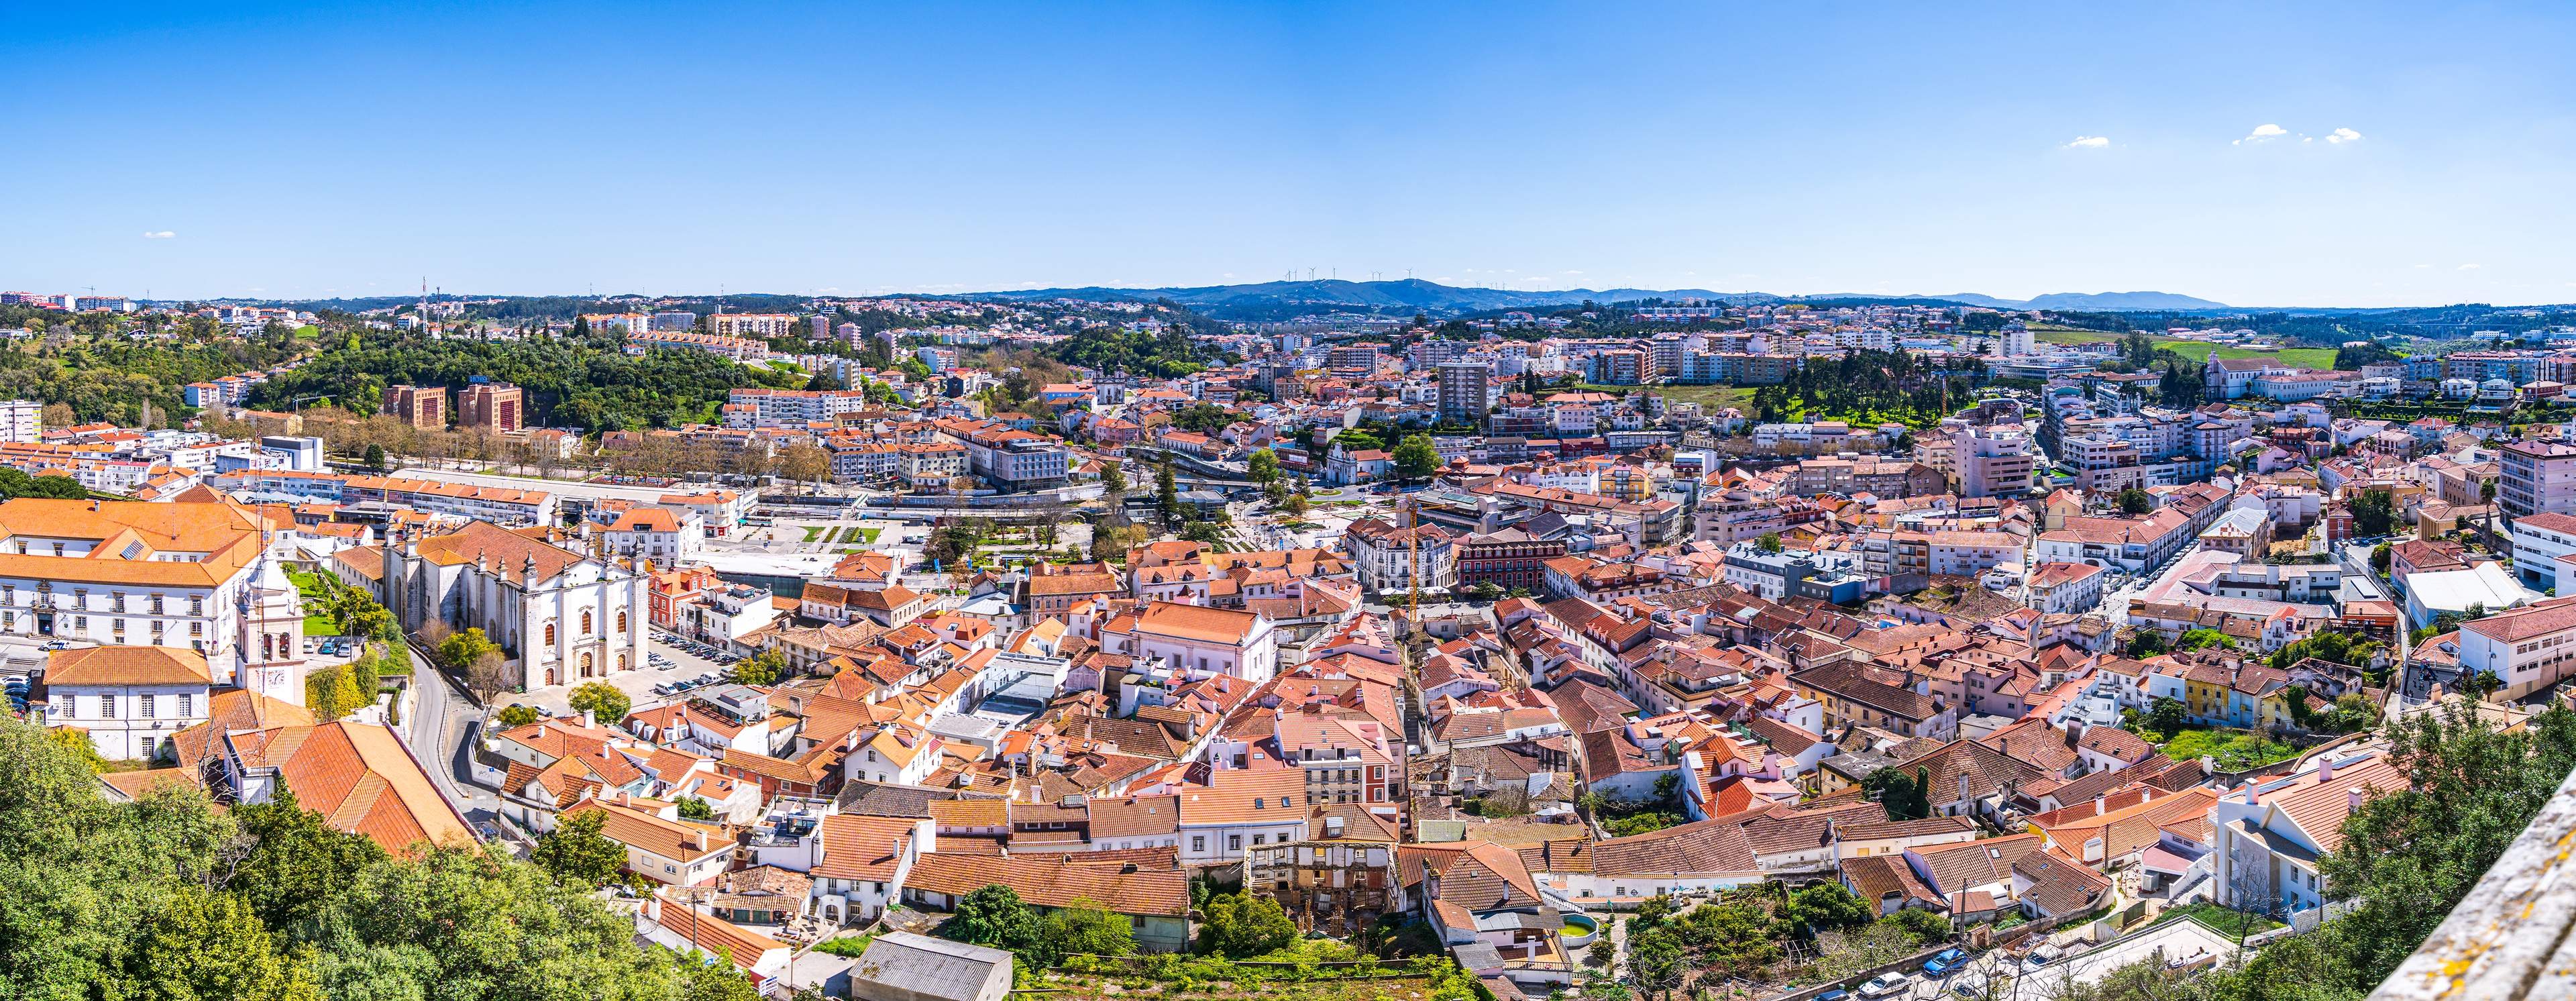 Panoramic view of Leiria town, seen from Castelo de Leiria, Portugal